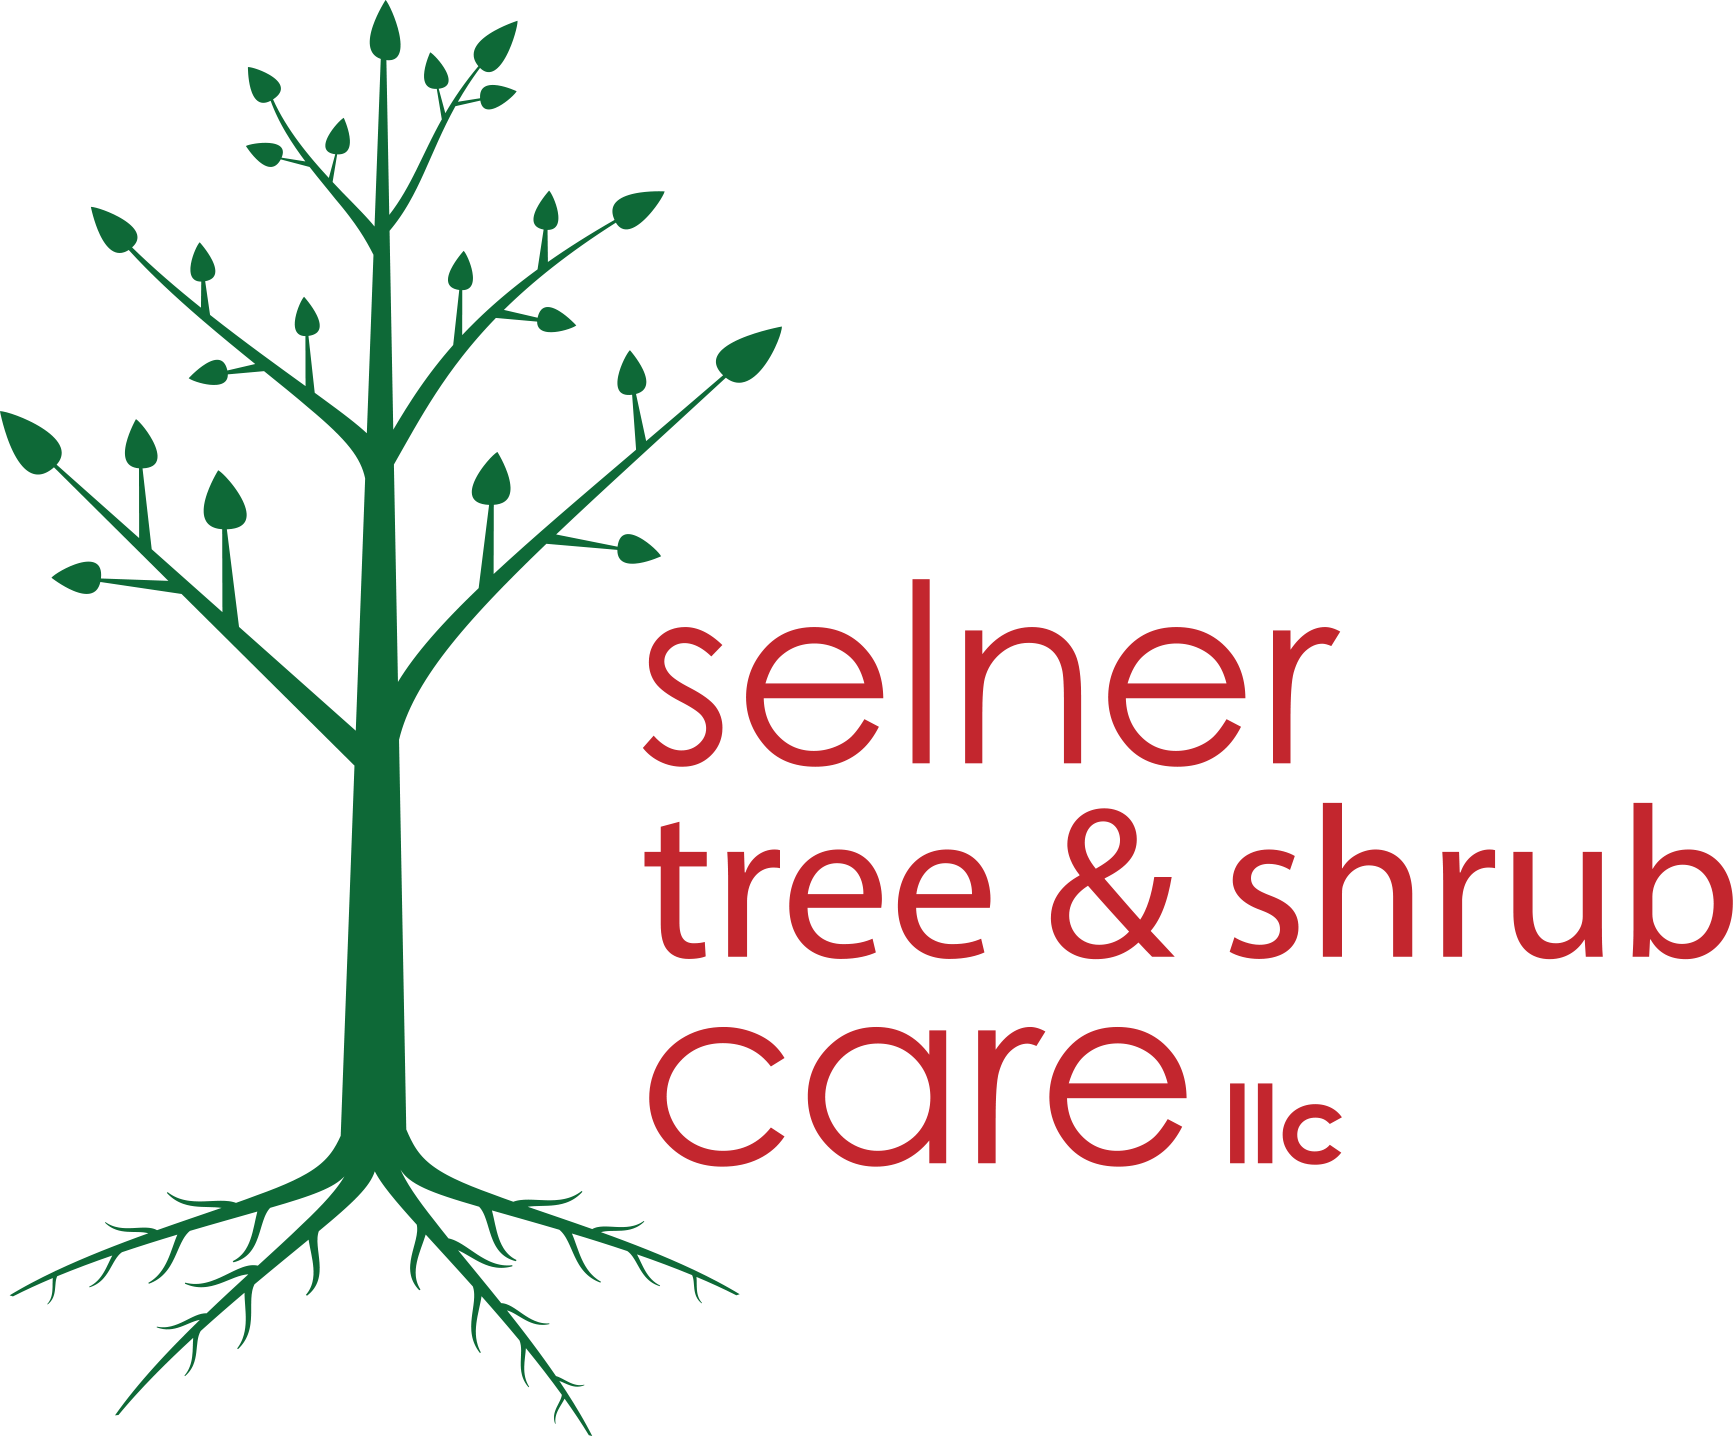 Selner Tree & Shrub Care